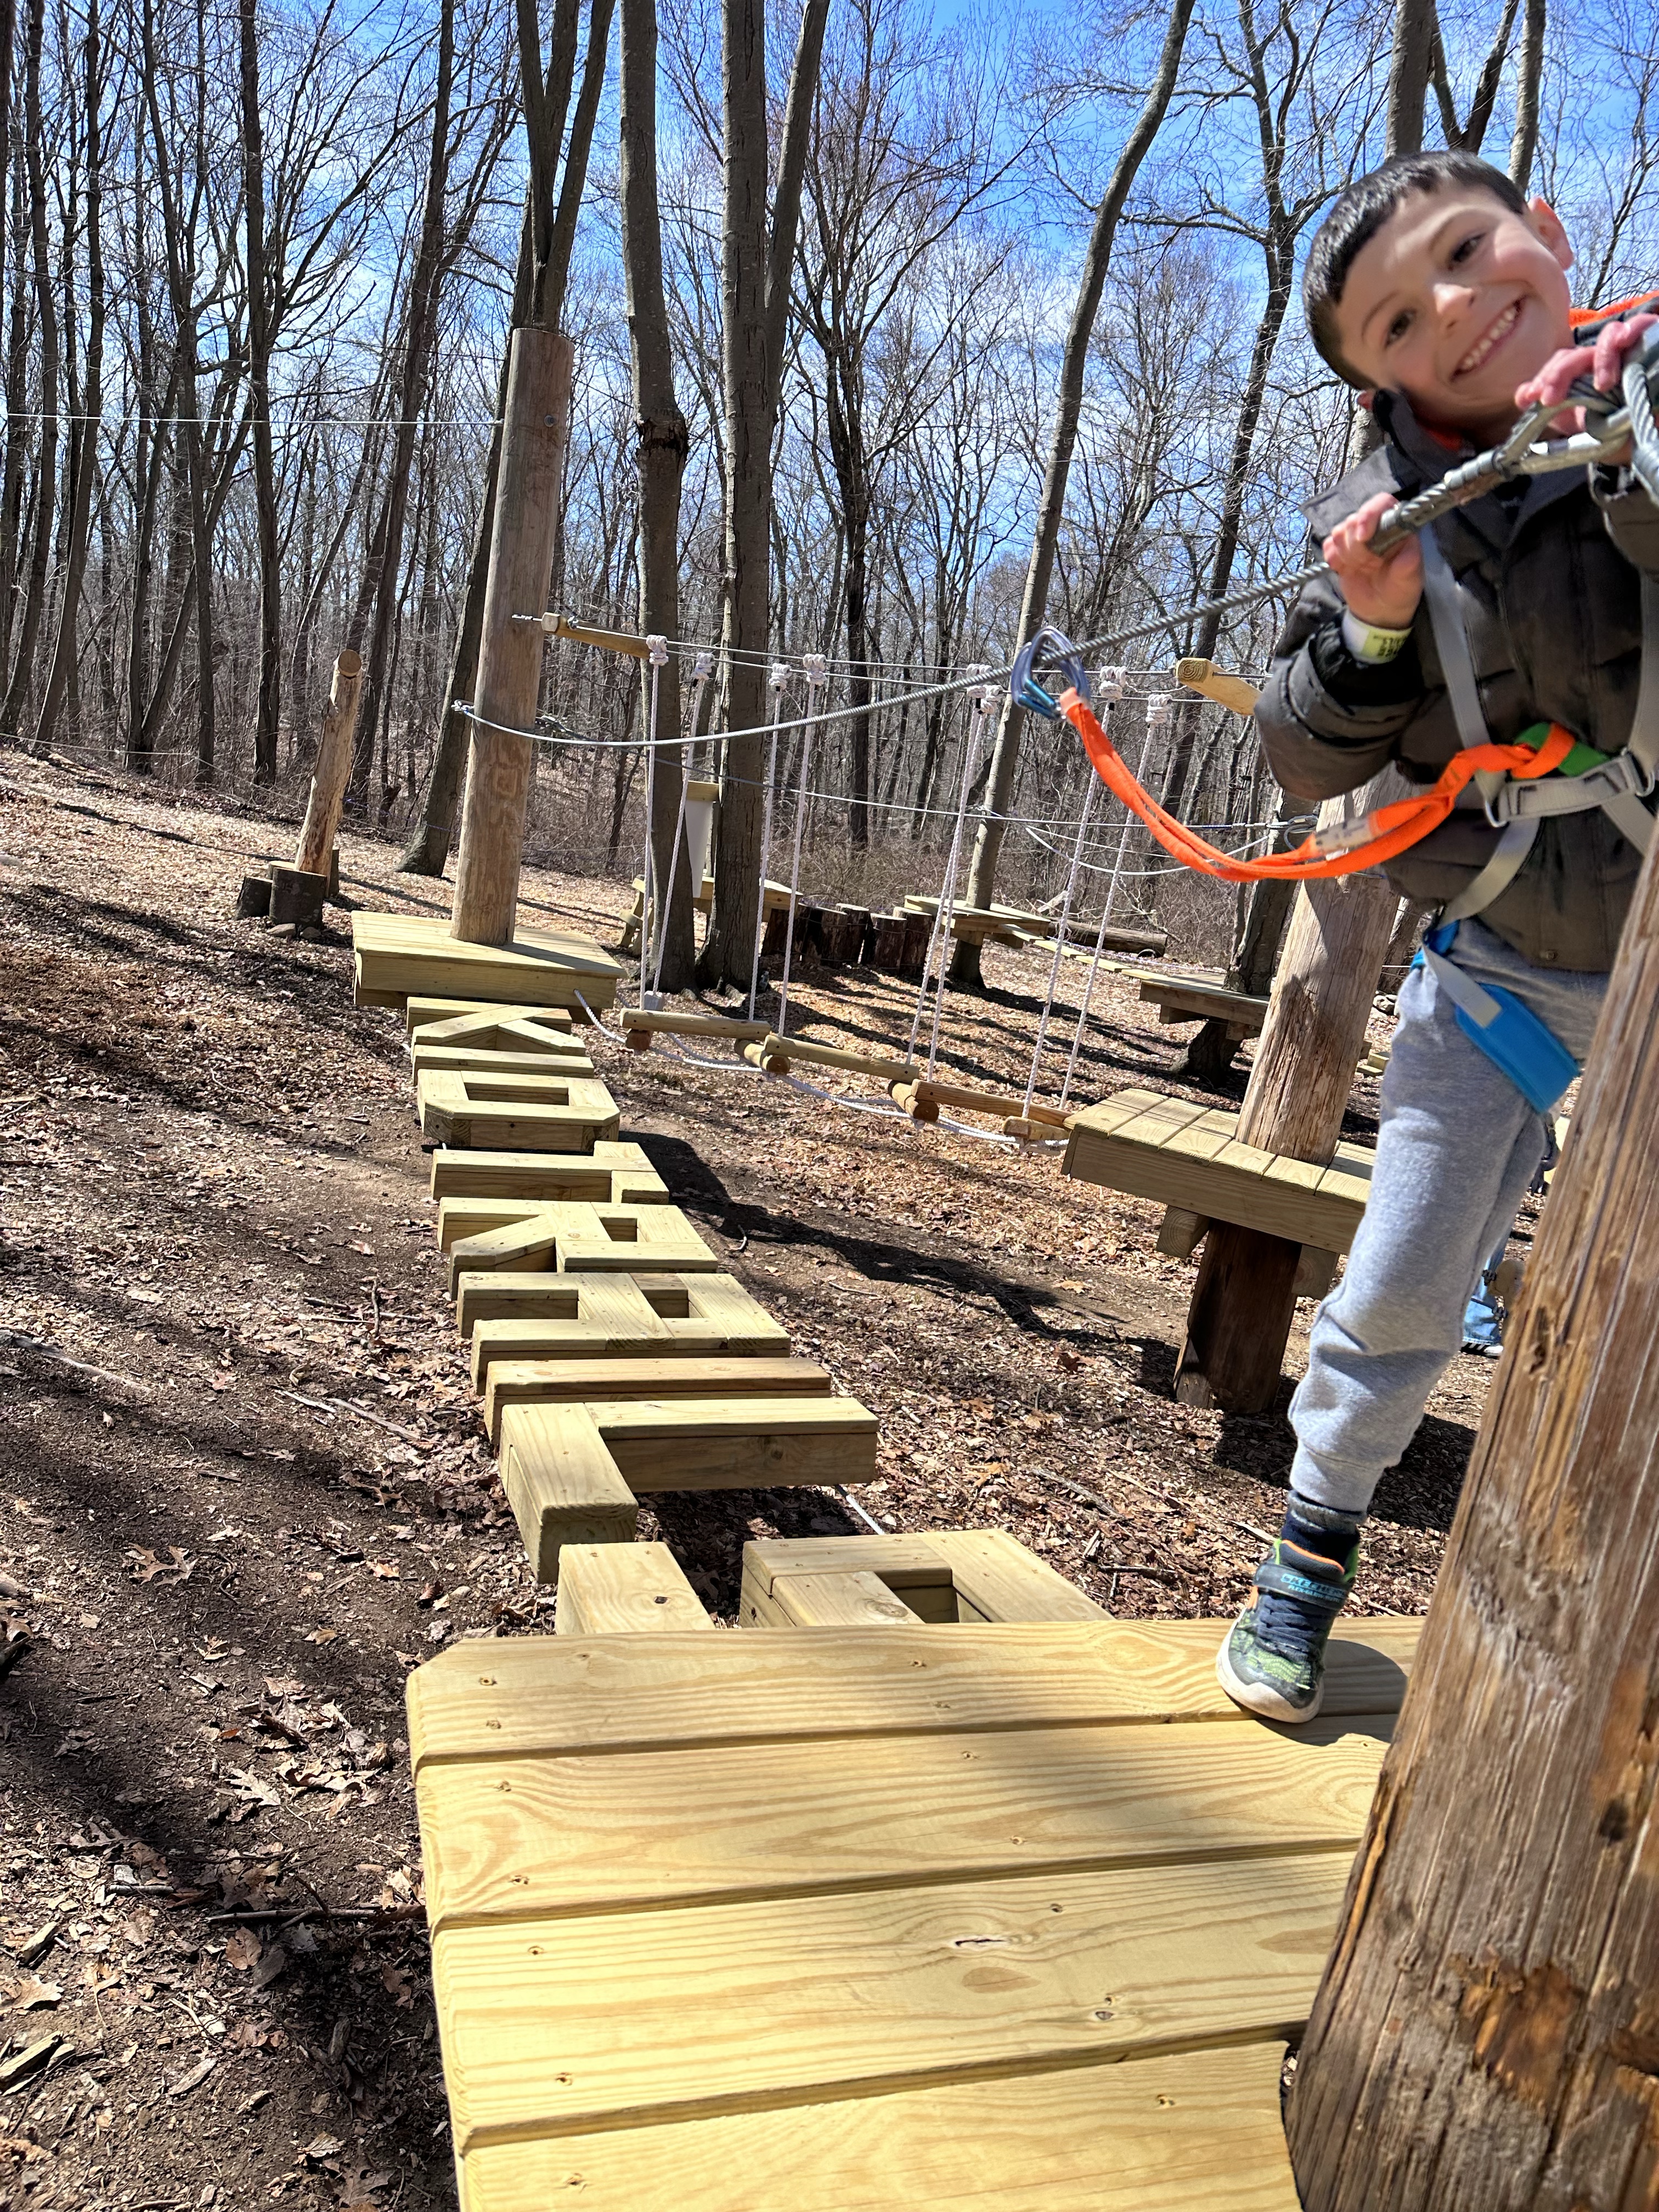 TreeTrails Adventures - Activities in New England for Young Kids